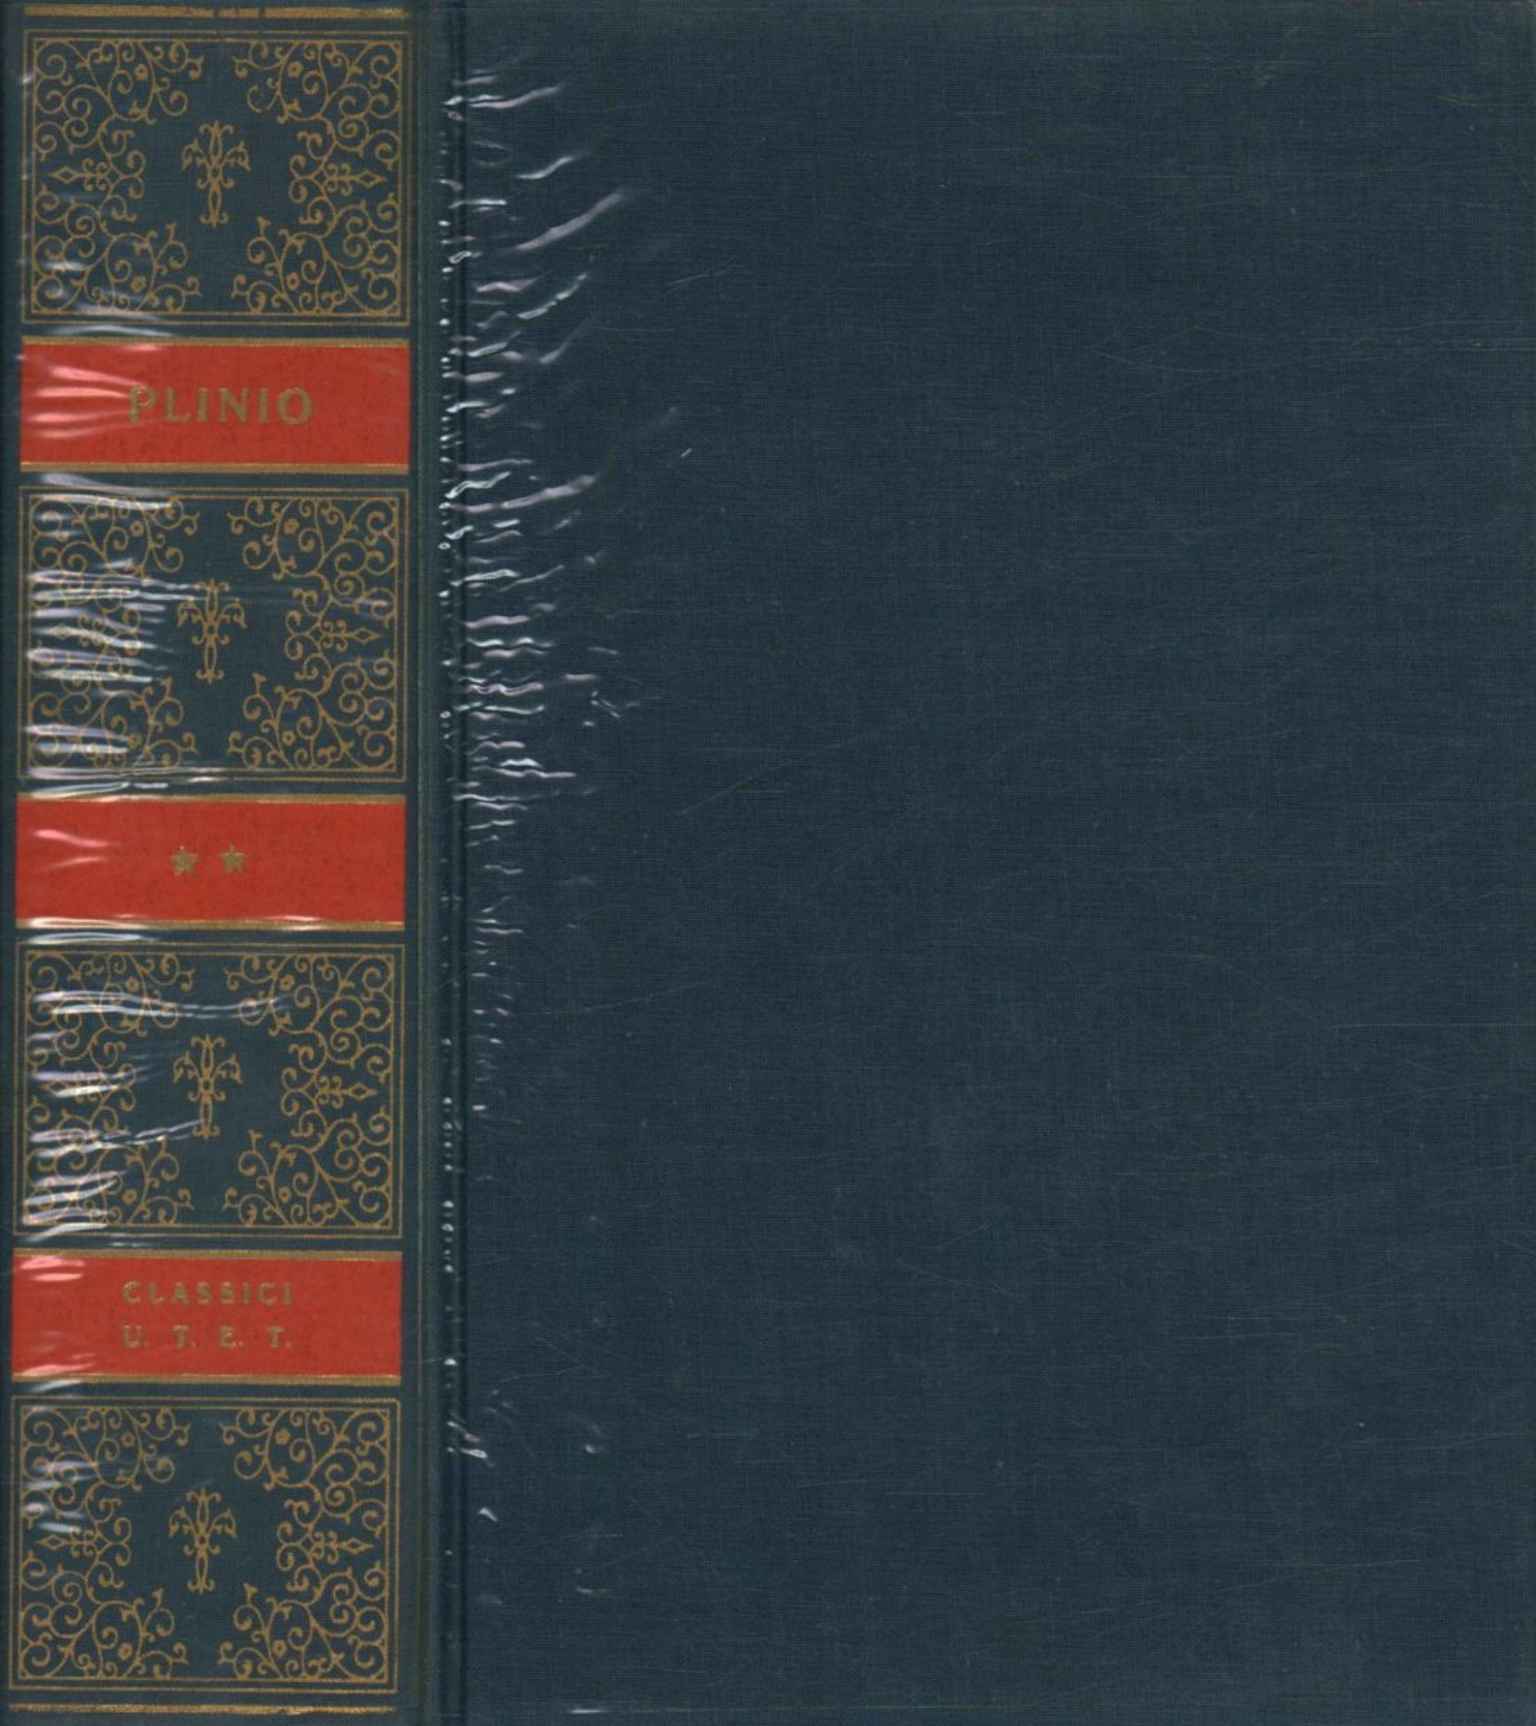 Works of Plinio Cecilio Secondo (Volume%,Works of Plinio Cecilio Secondo (Volume%